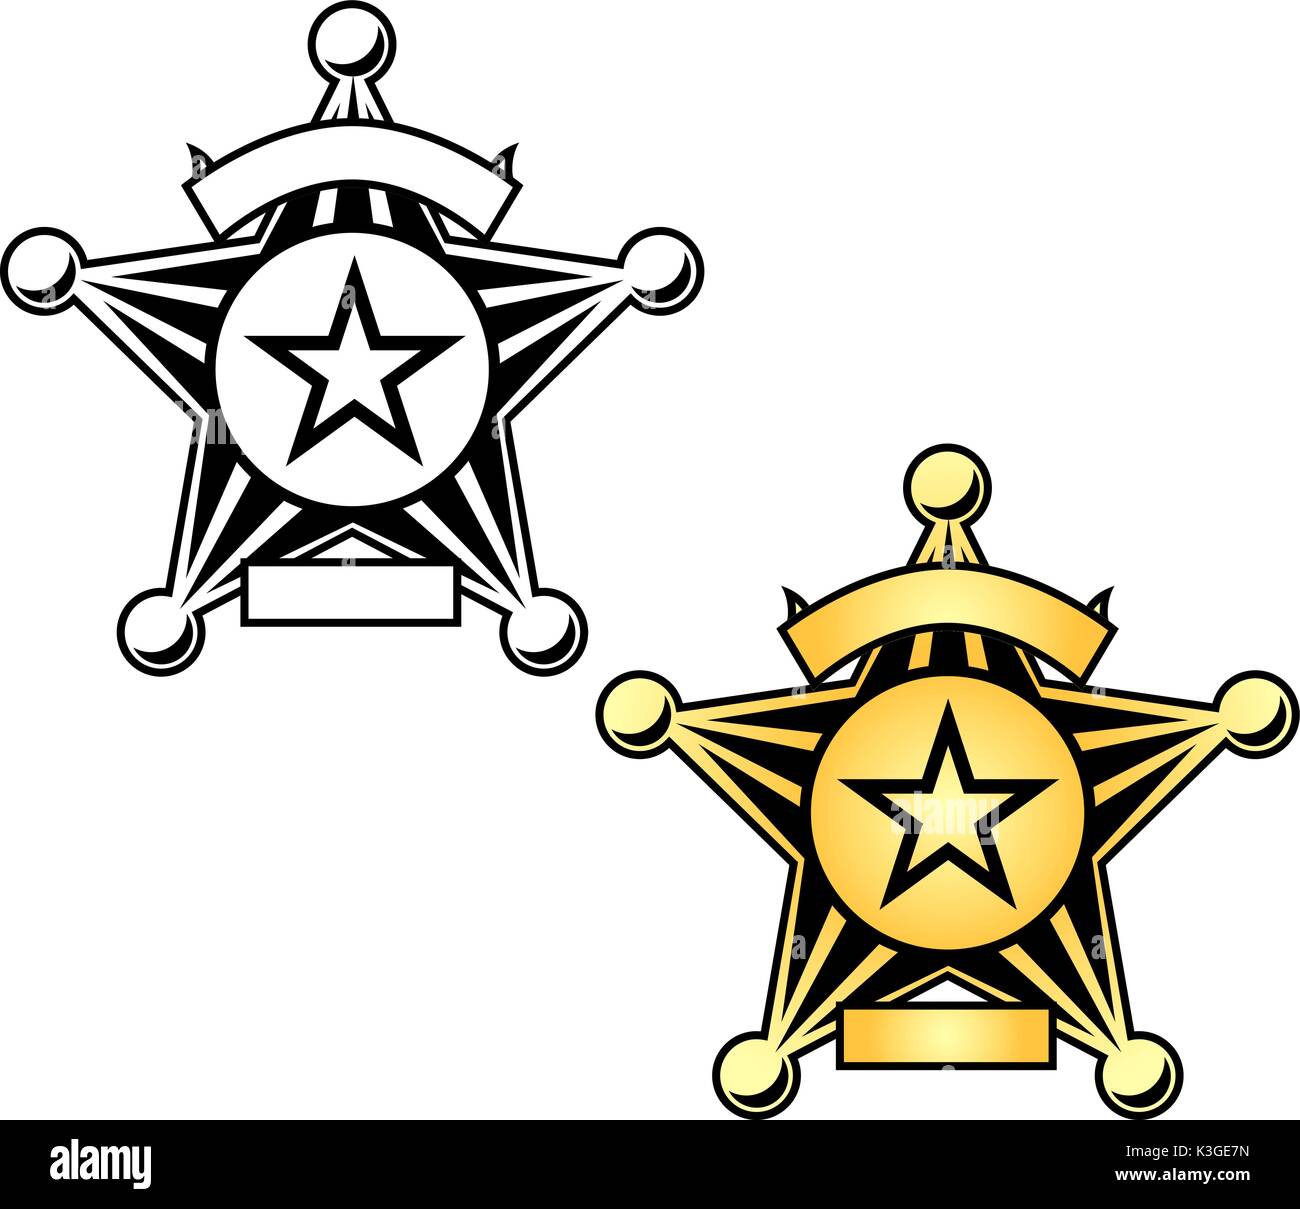 Sheriff Police Star Badge Illustration Stock Vector